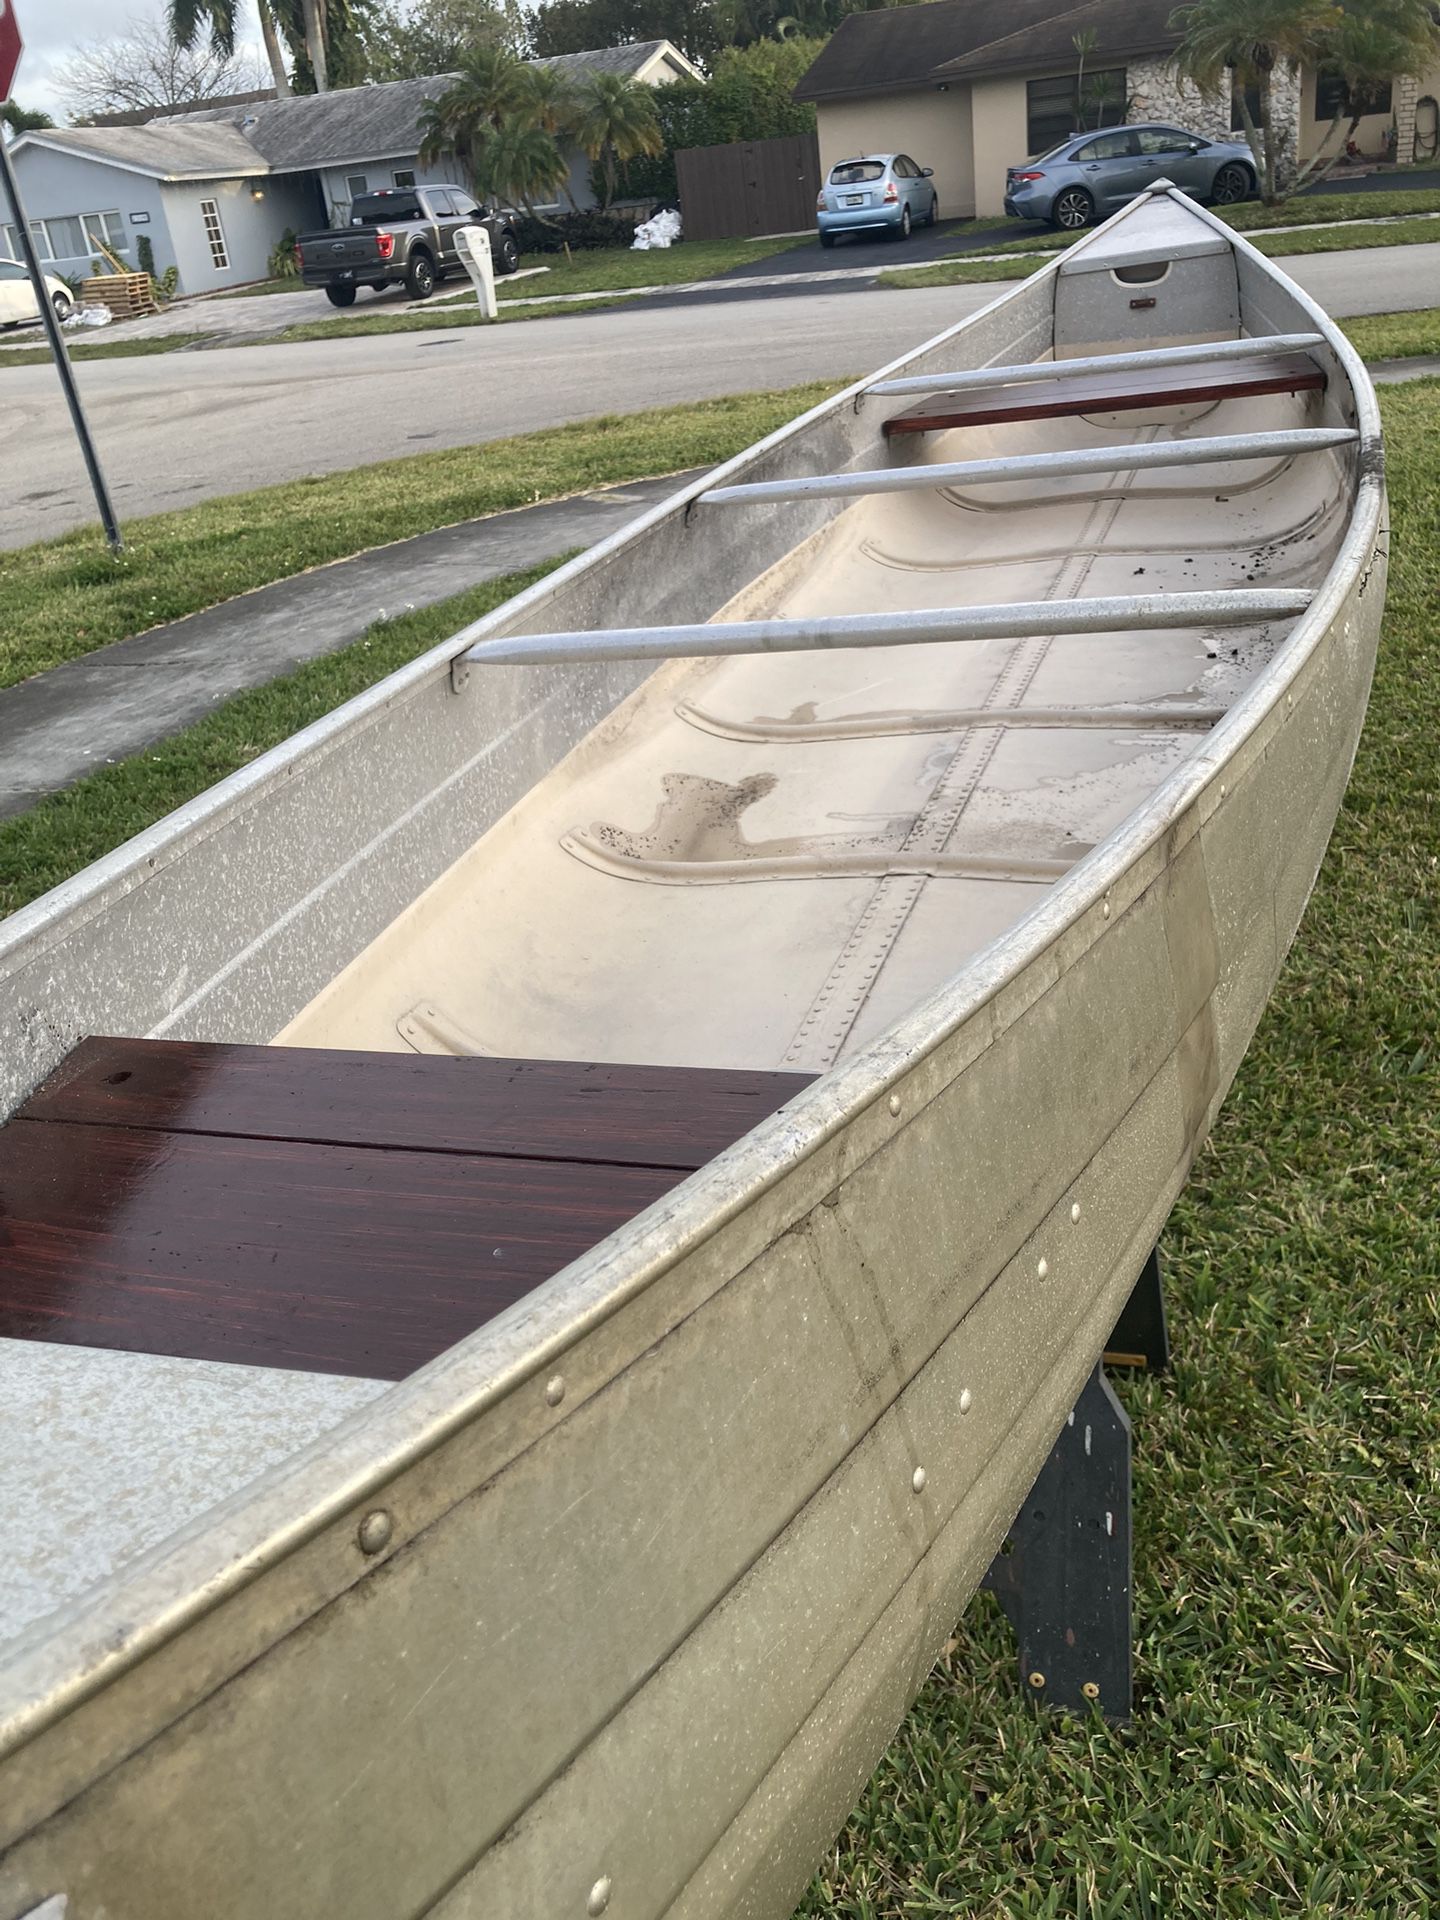 Canoe 17’ Aluminum, Craftsman, Kendall West Area 